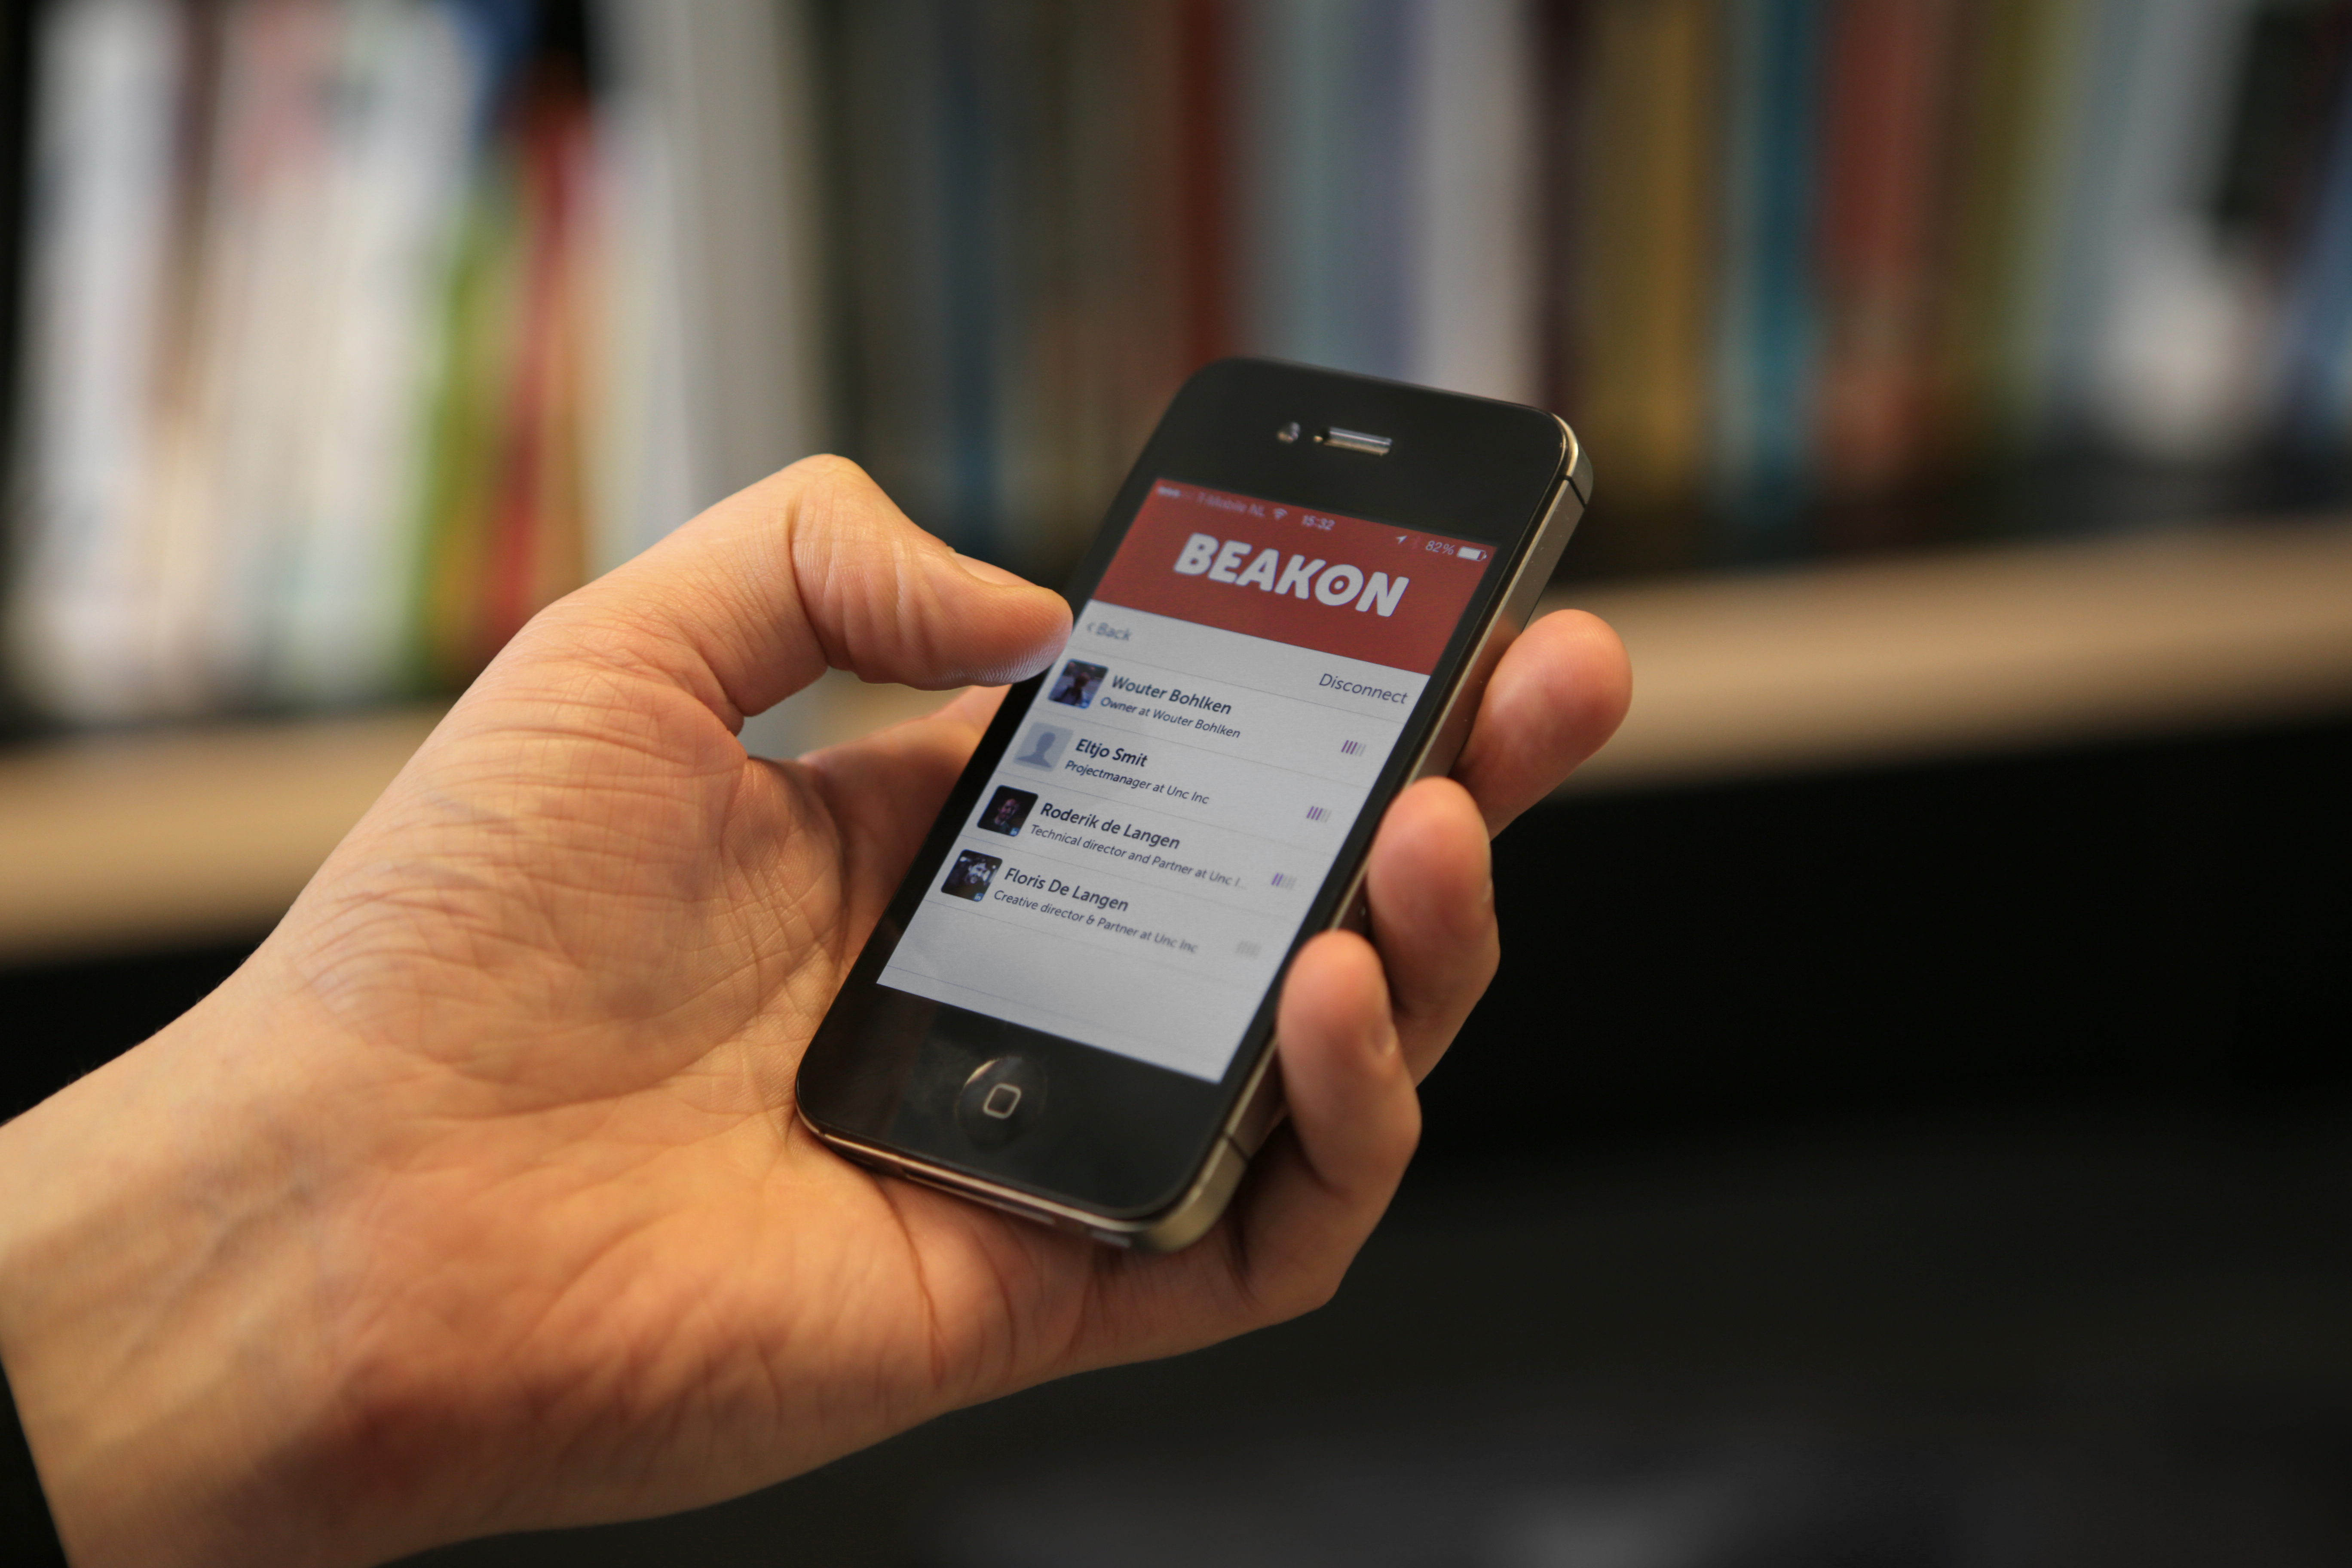 beakon, a location based relevance app